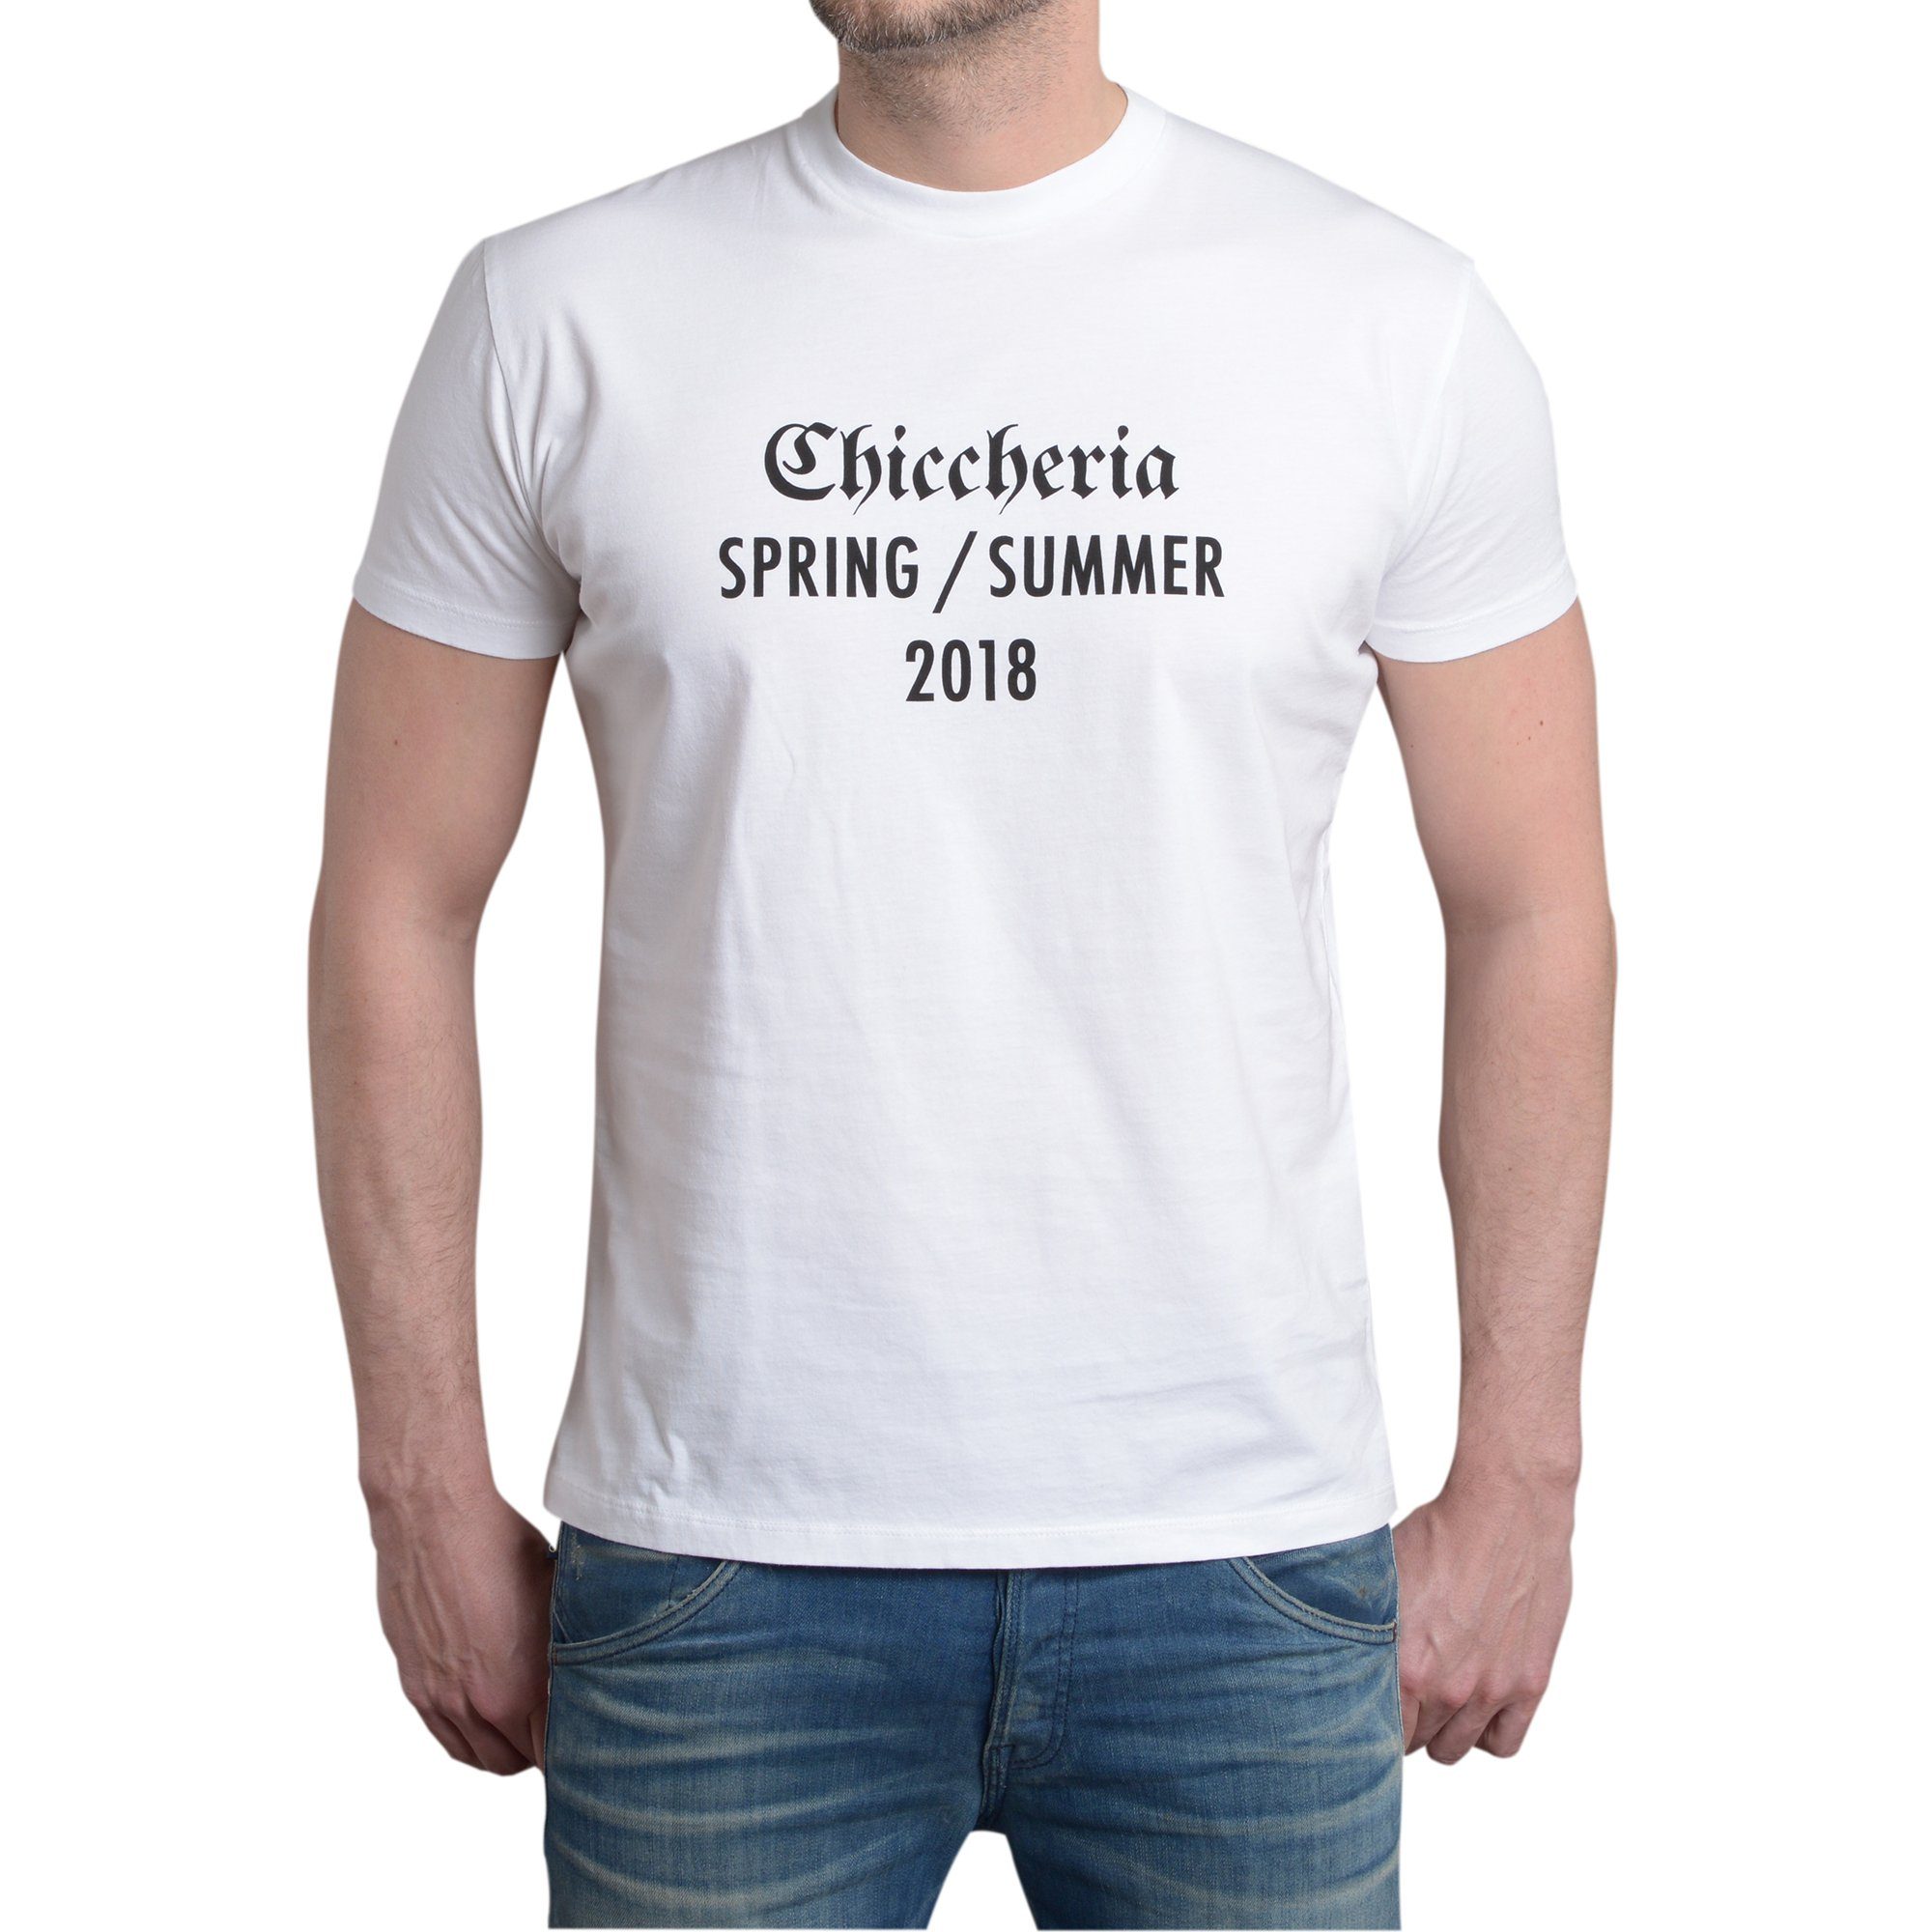 Chiccheria Brand T-Shirt Spring / Summer 2018